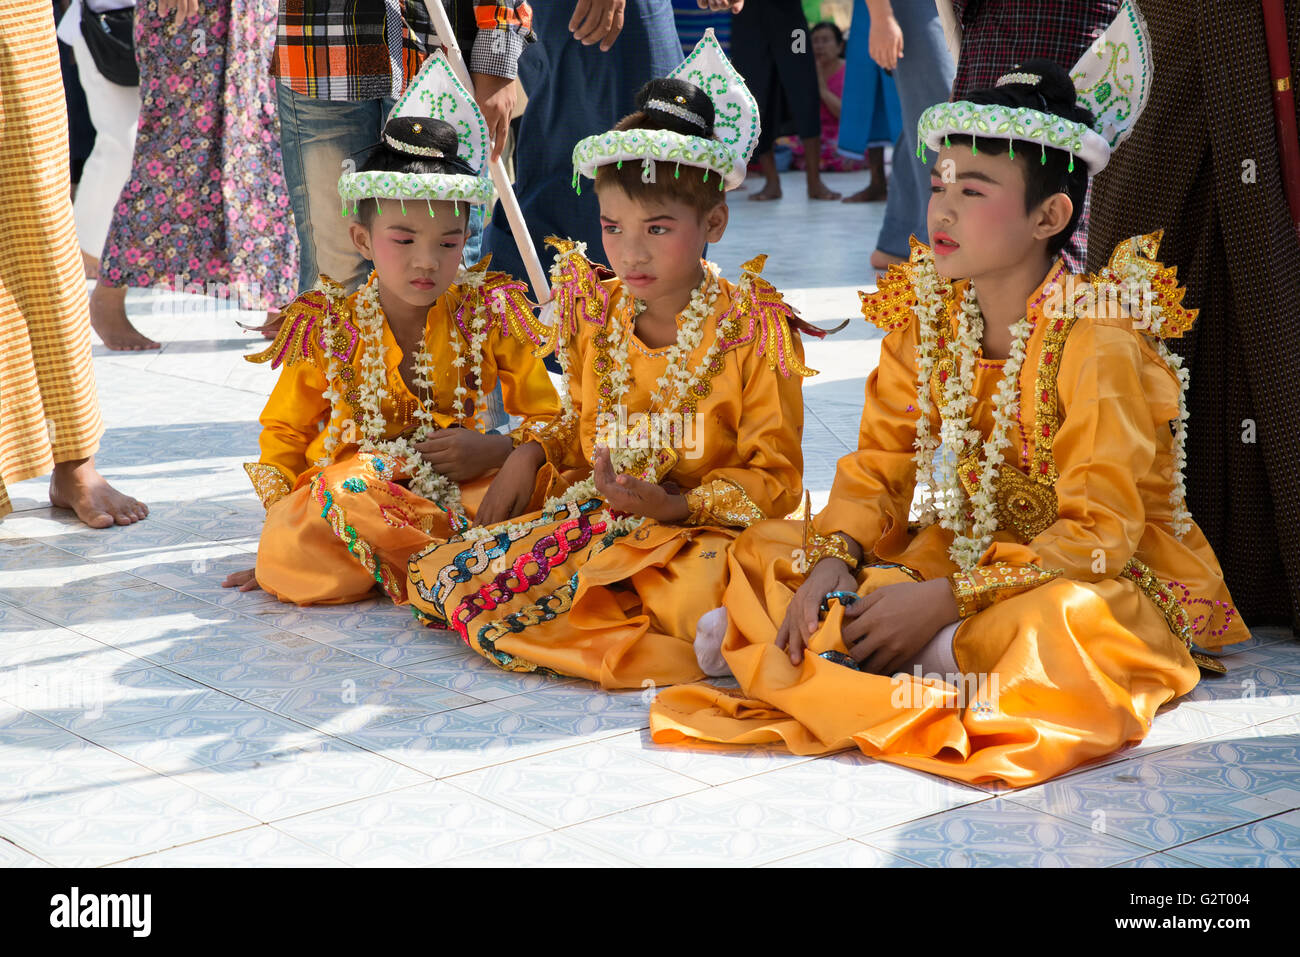 Three boys dressed for shinbyu novitiation ceremony sitting on the ground, Botataung Pagoda, Yangon, Yangon State, Myanmar Stock Photo